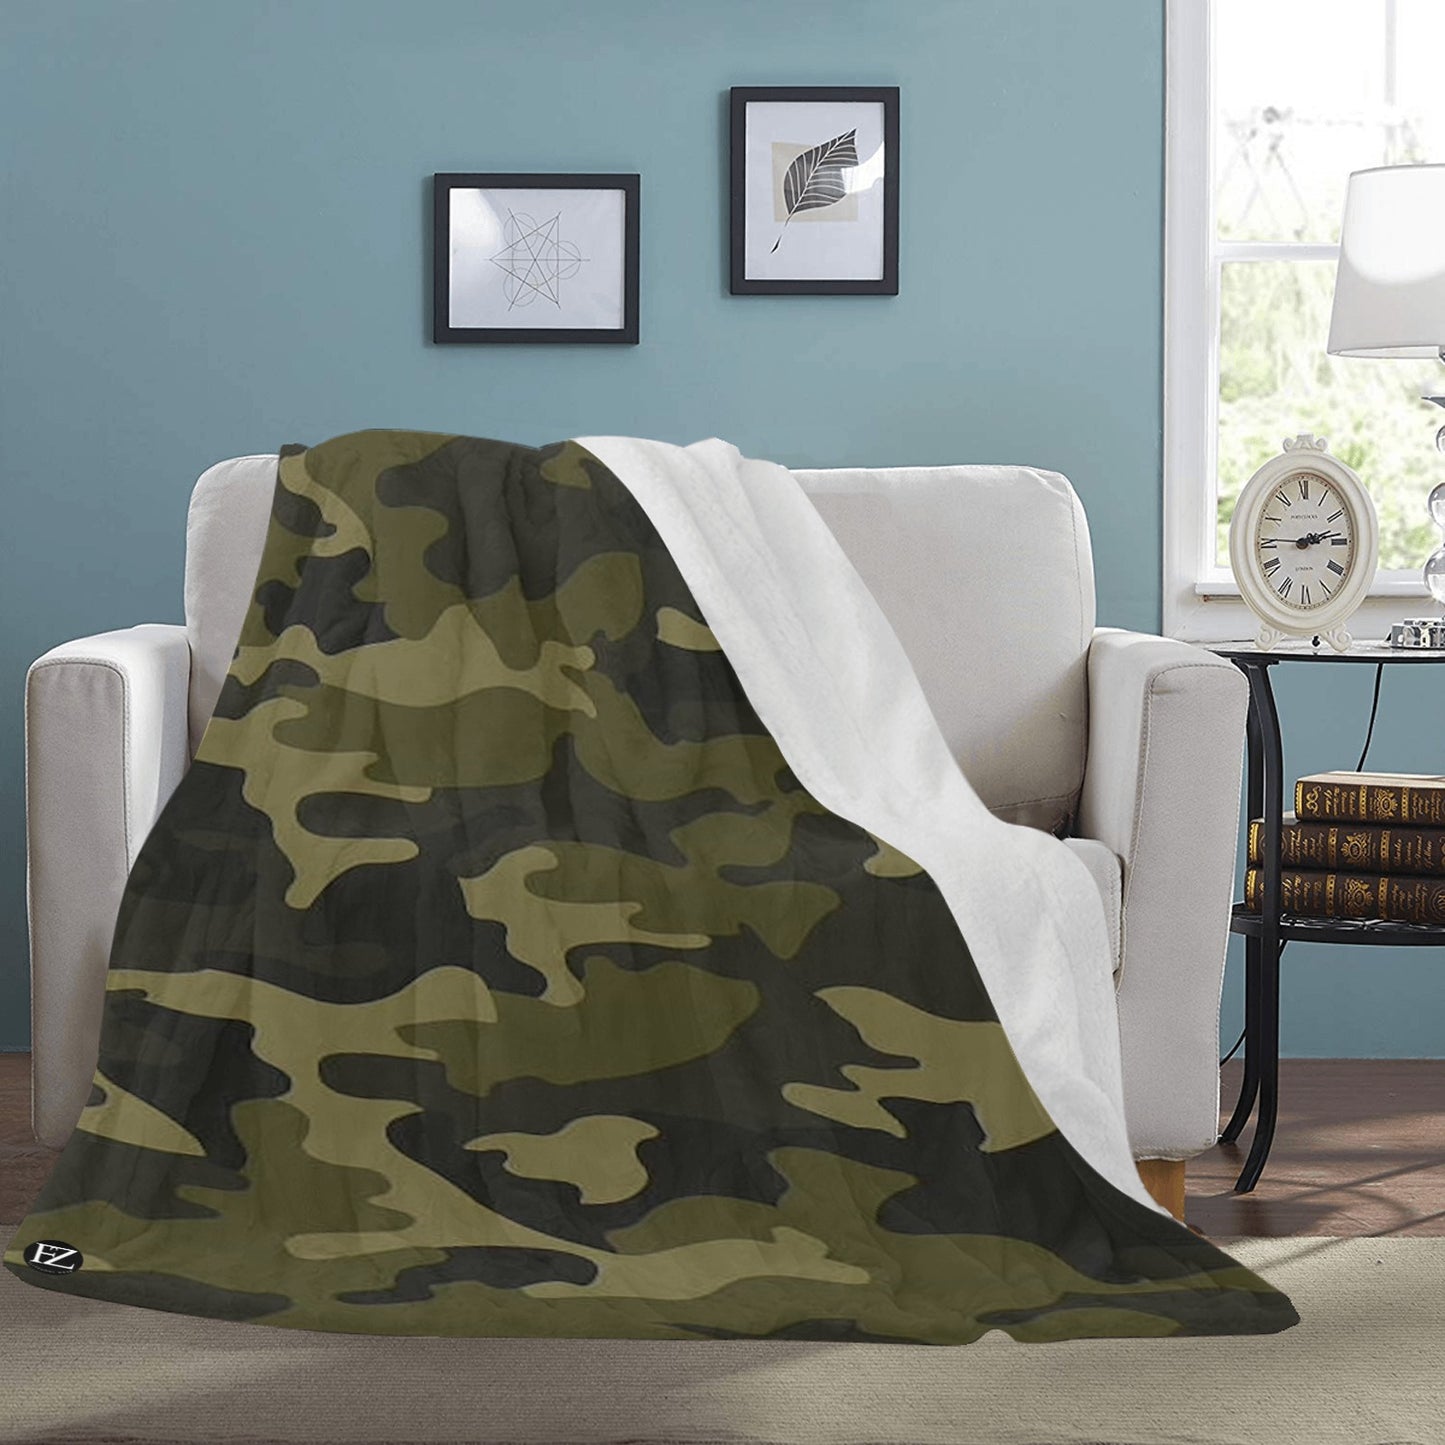 fz green tye blanket ultra-soft micro fleece blanket 70"x80"